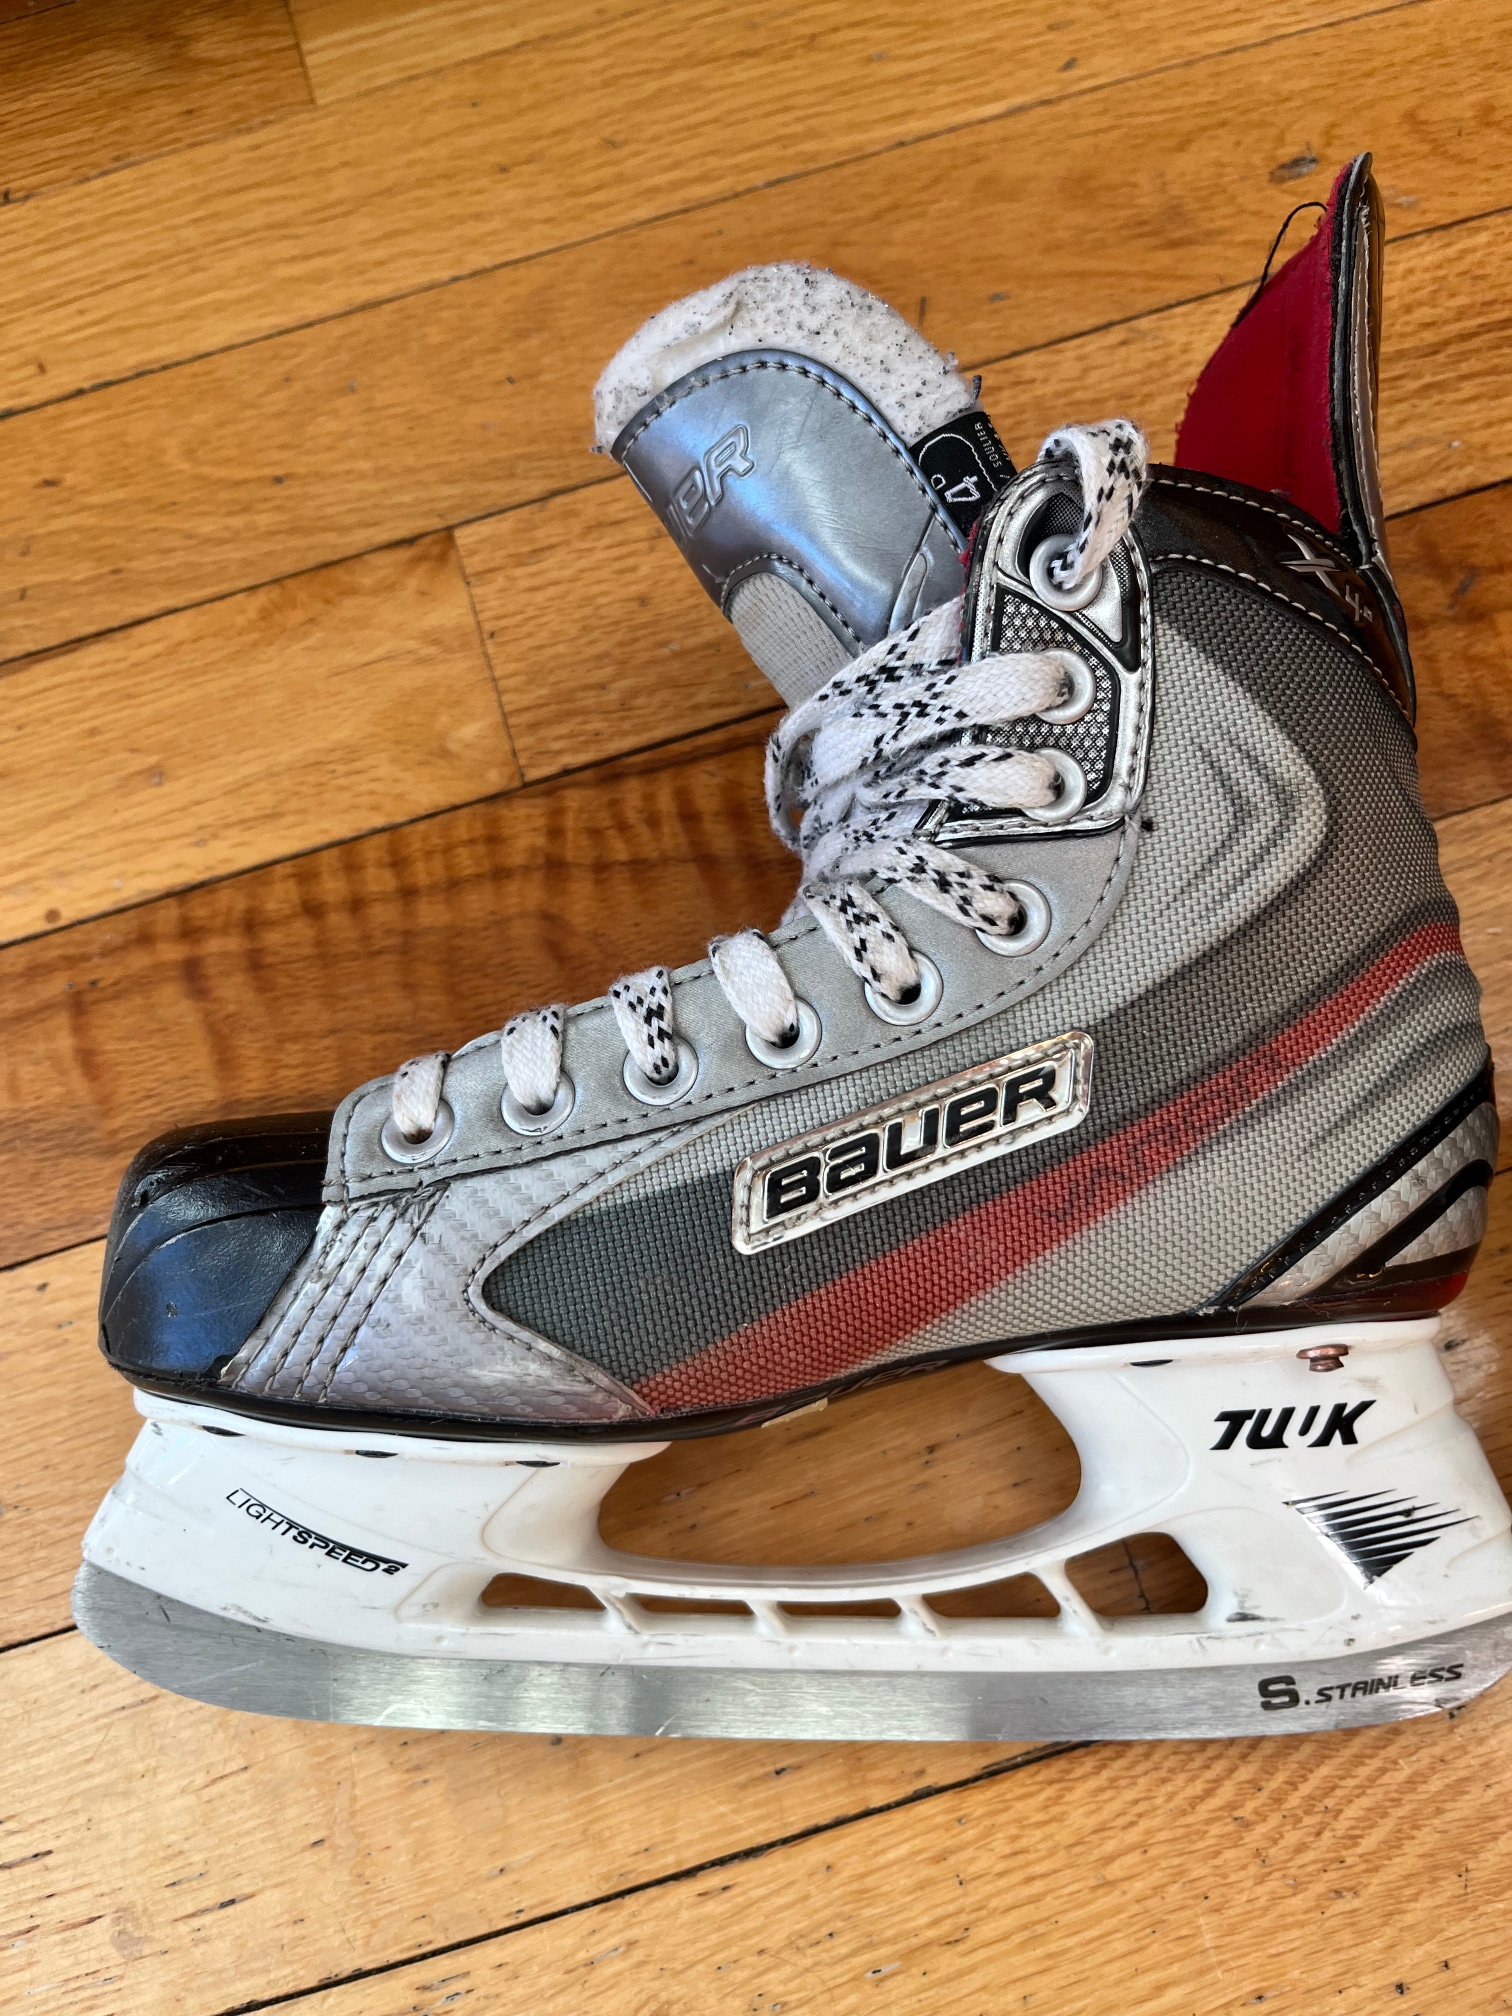 Bauer Vapor X4.0 Hockey Skates Size 4